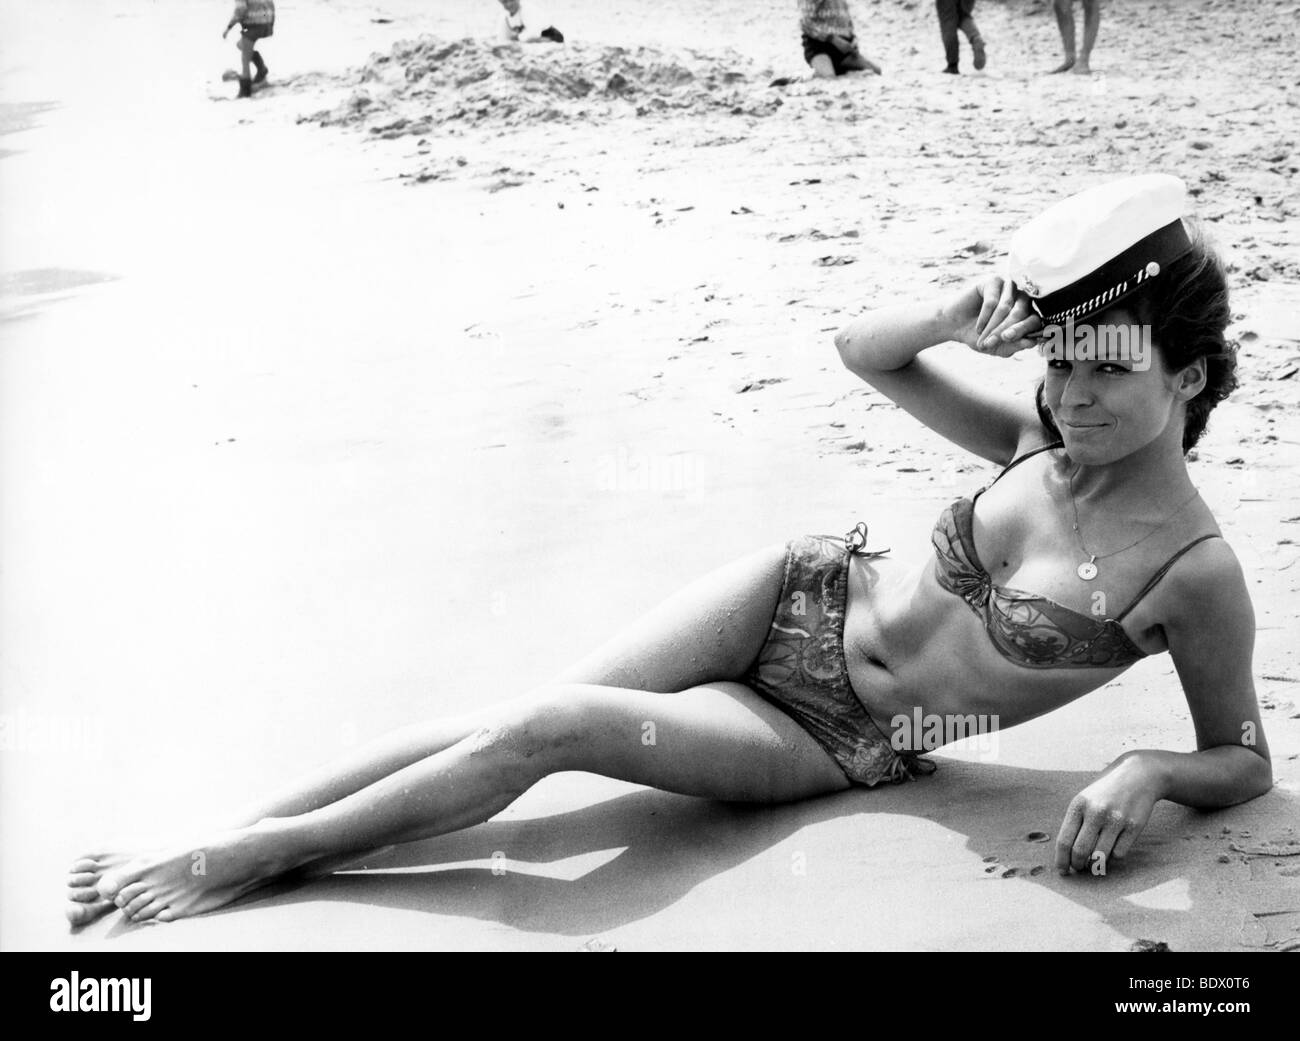 German beach bikini hi-res stock photography and images - Alamy